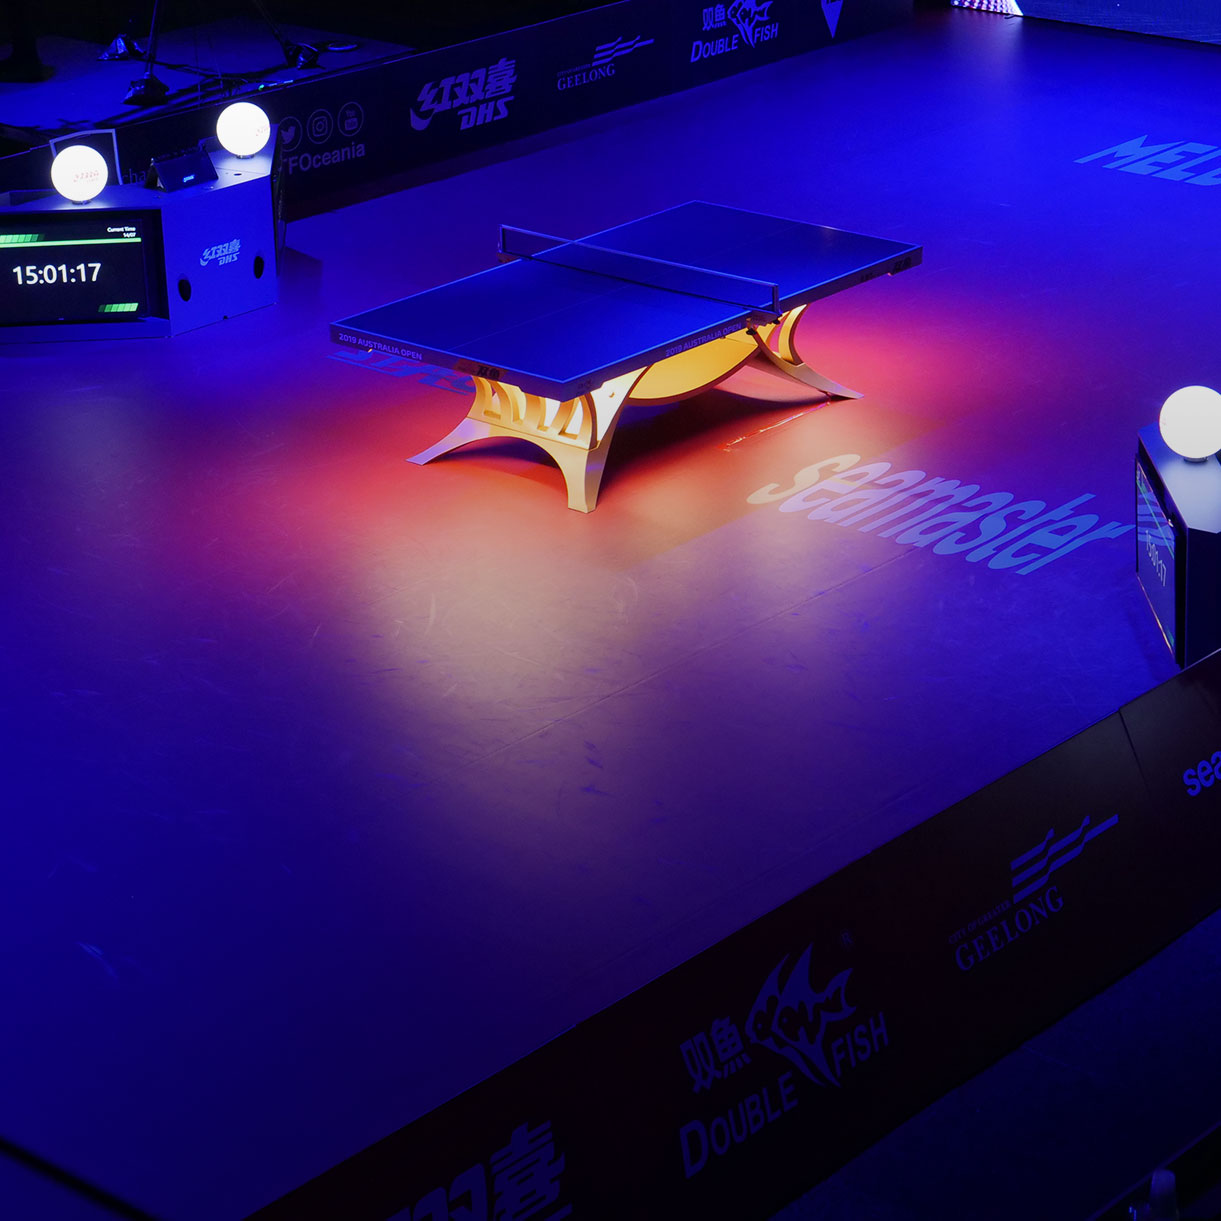 ITTF Australian Open 2019